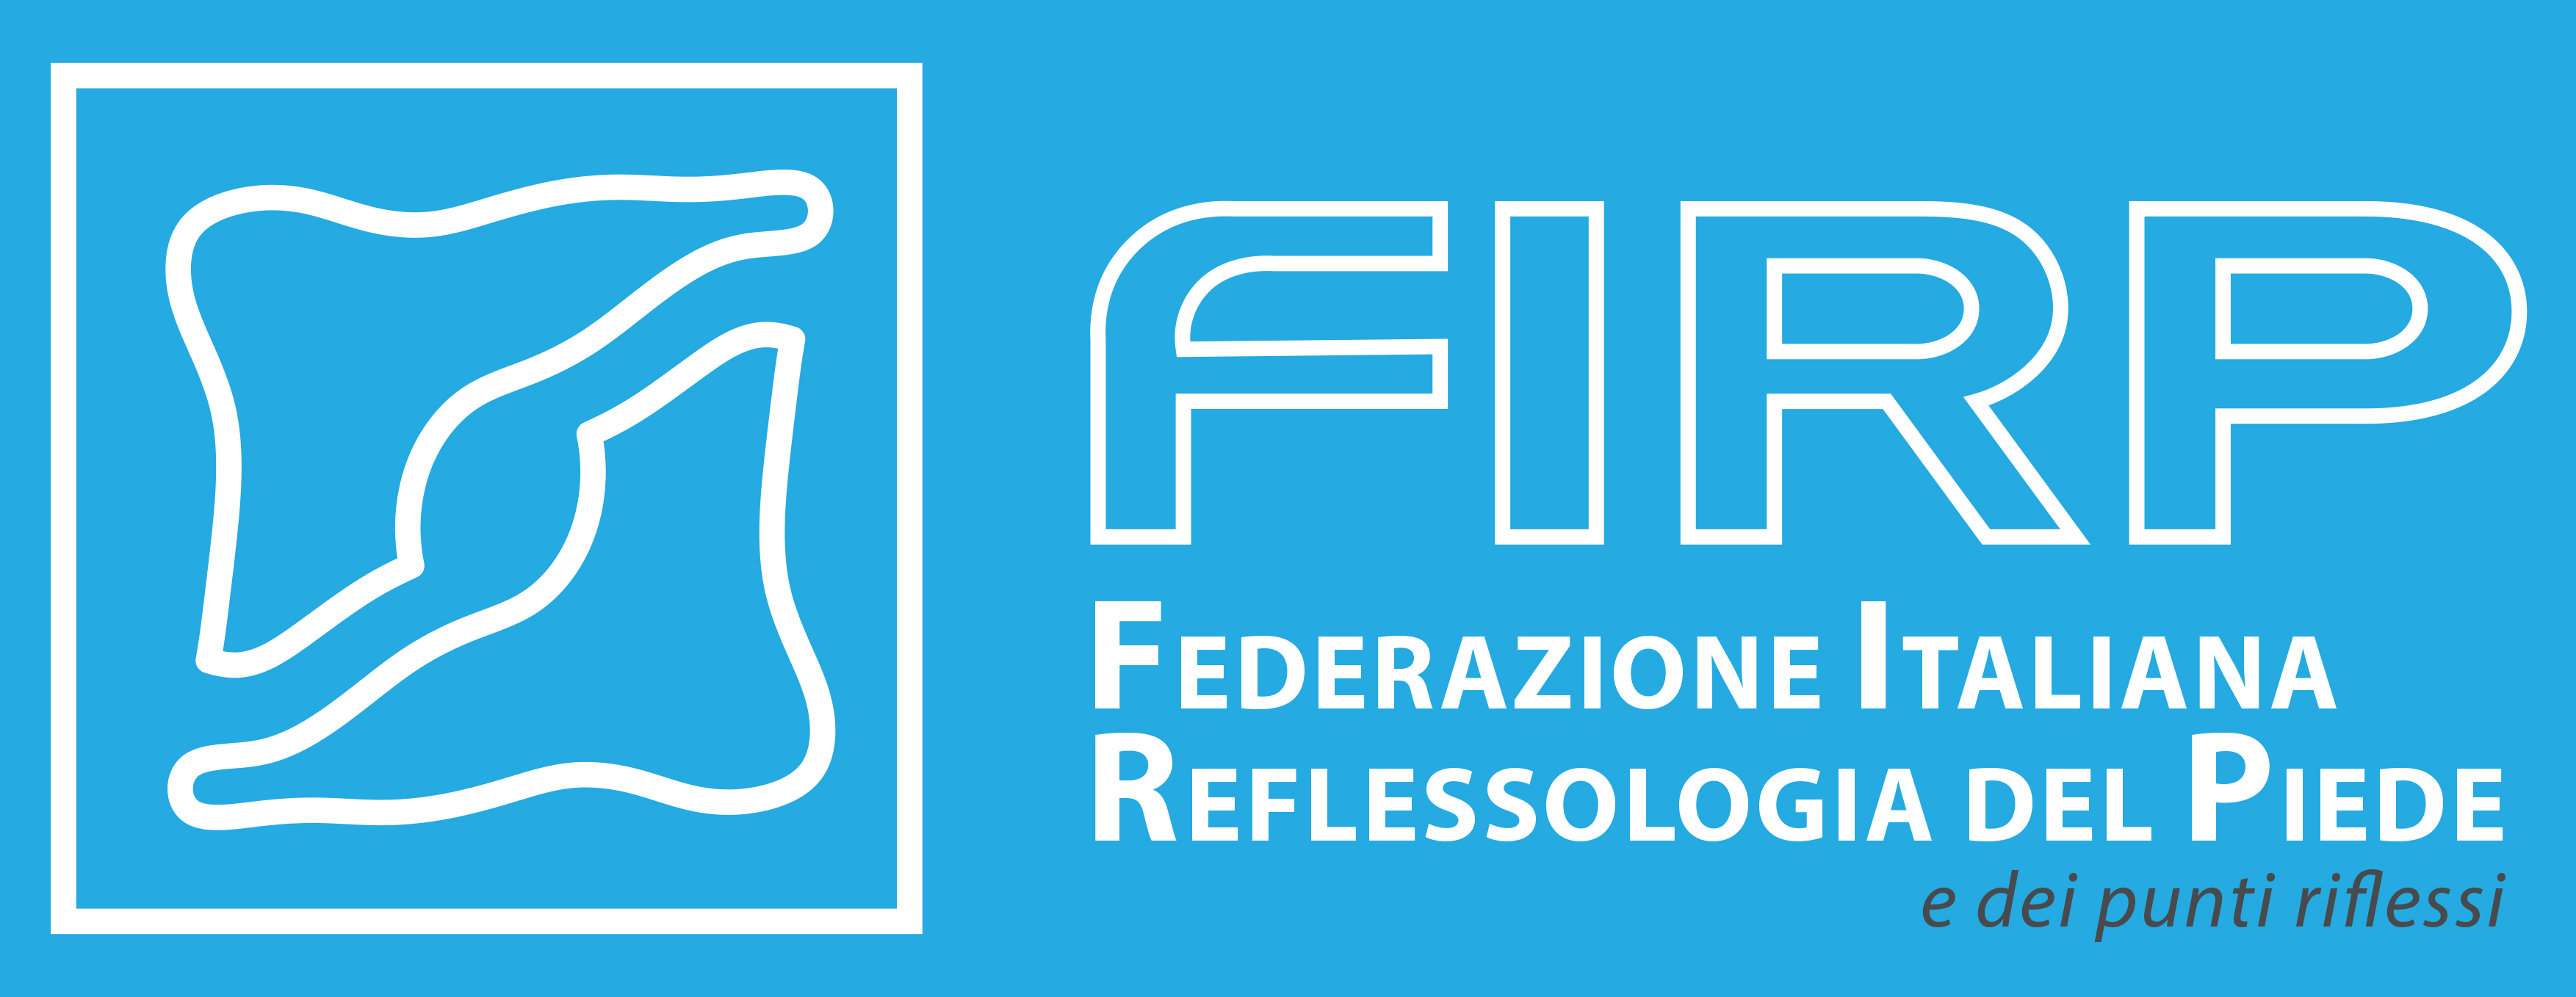 Logo firp ribattuto_sfondo ciano.jpg